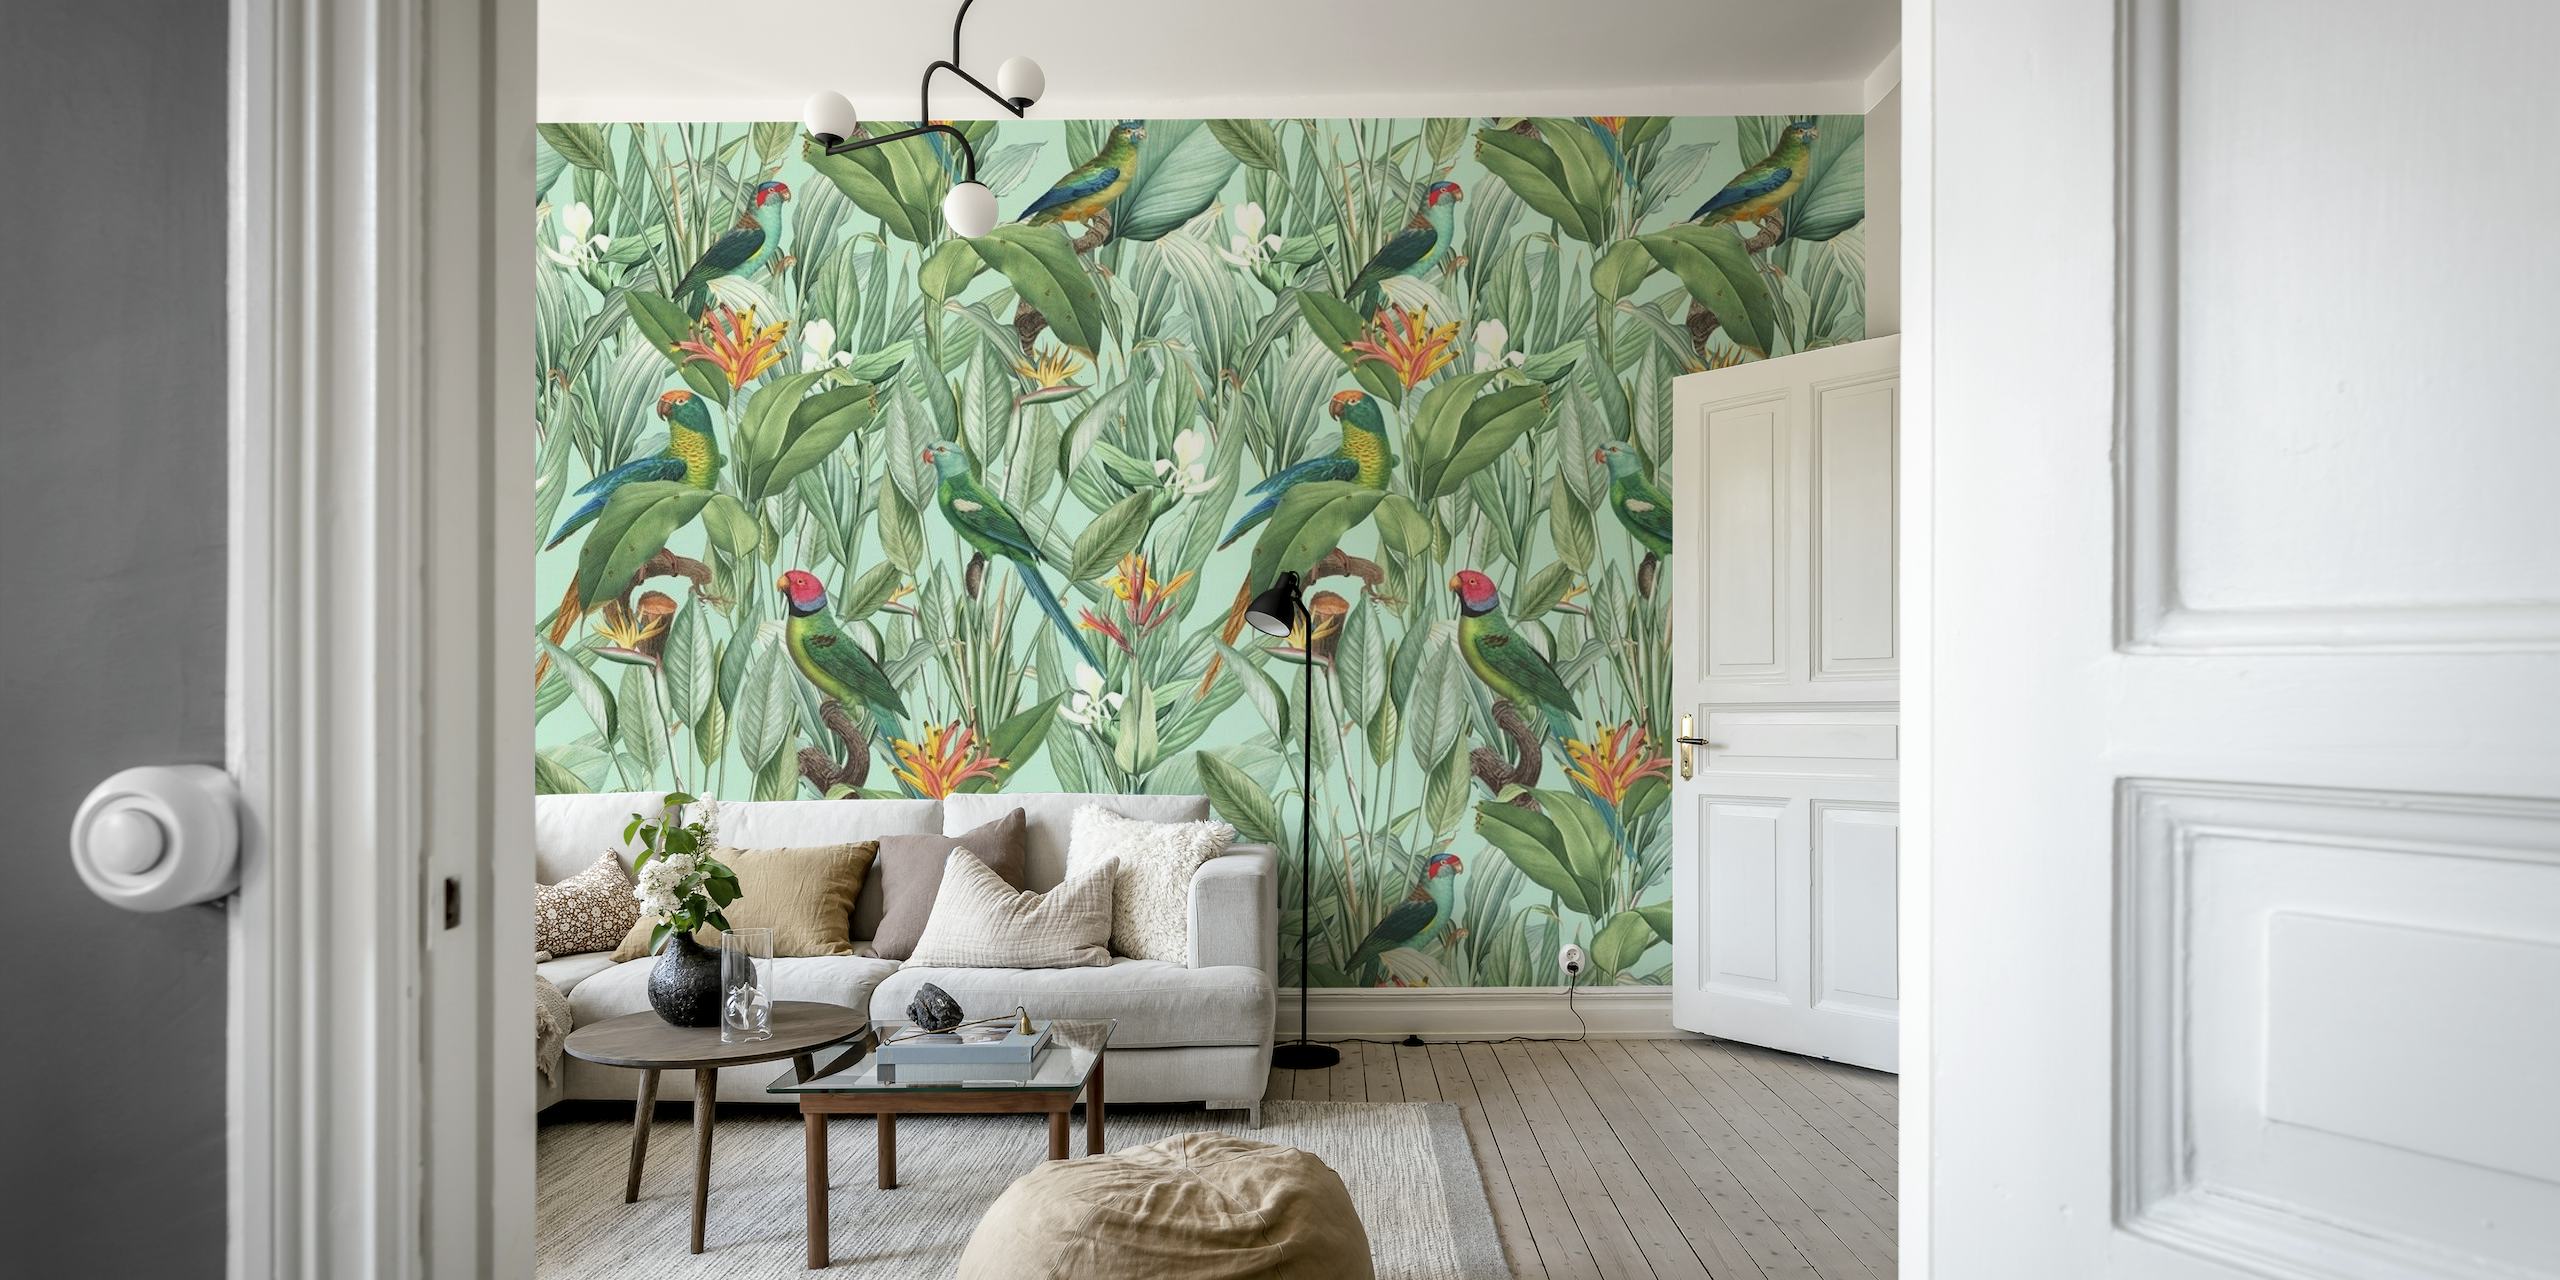 Tropical Parrots in the Jungle wallpaper